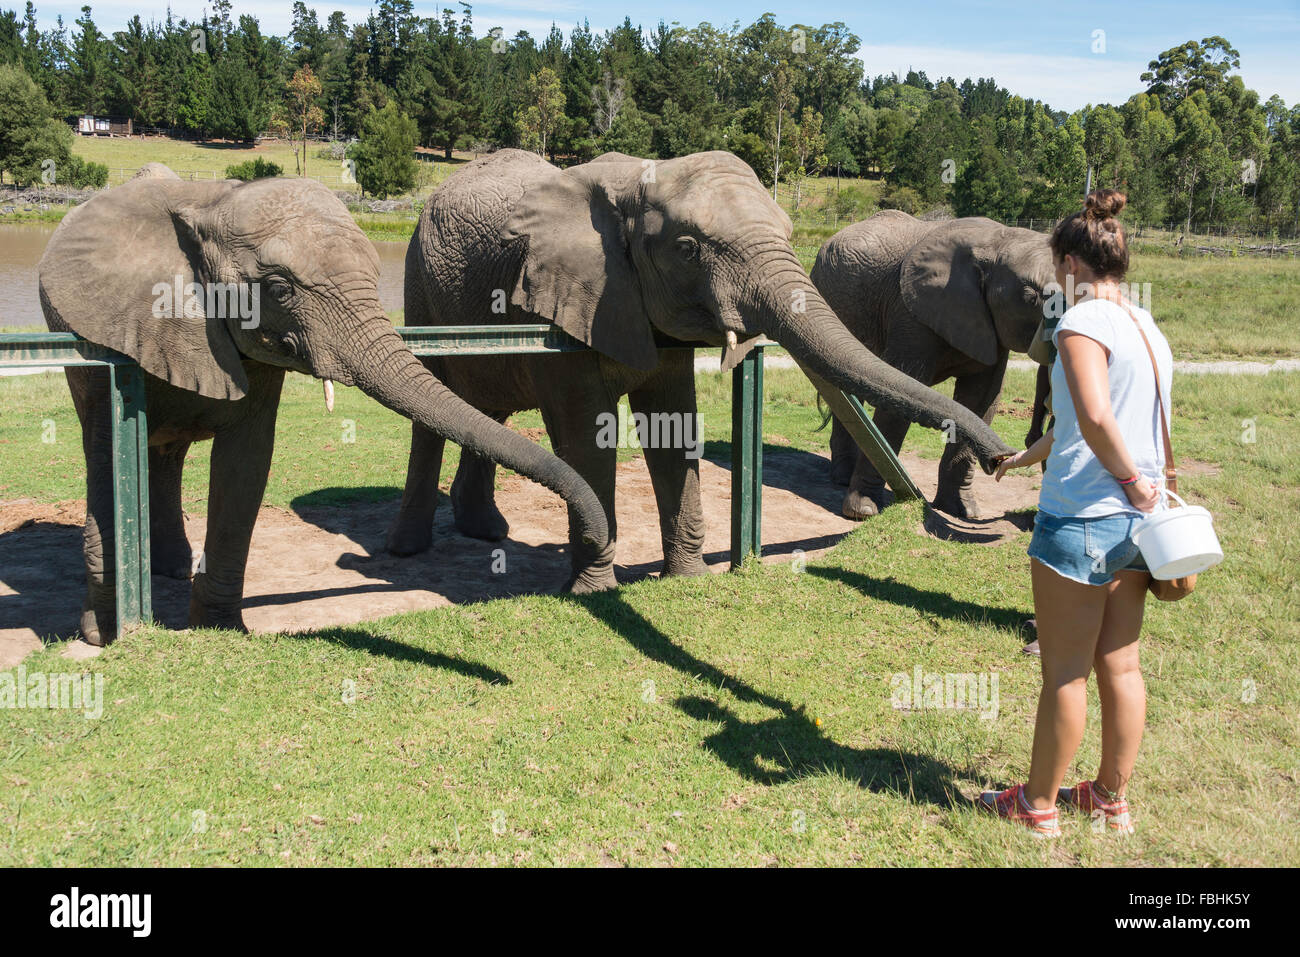 Feeding elephants at Knysna Elephant Park, Plettenberg Bay, Knysna, Knysna Municipality, Western Cape Province, South Africa Stock Photo